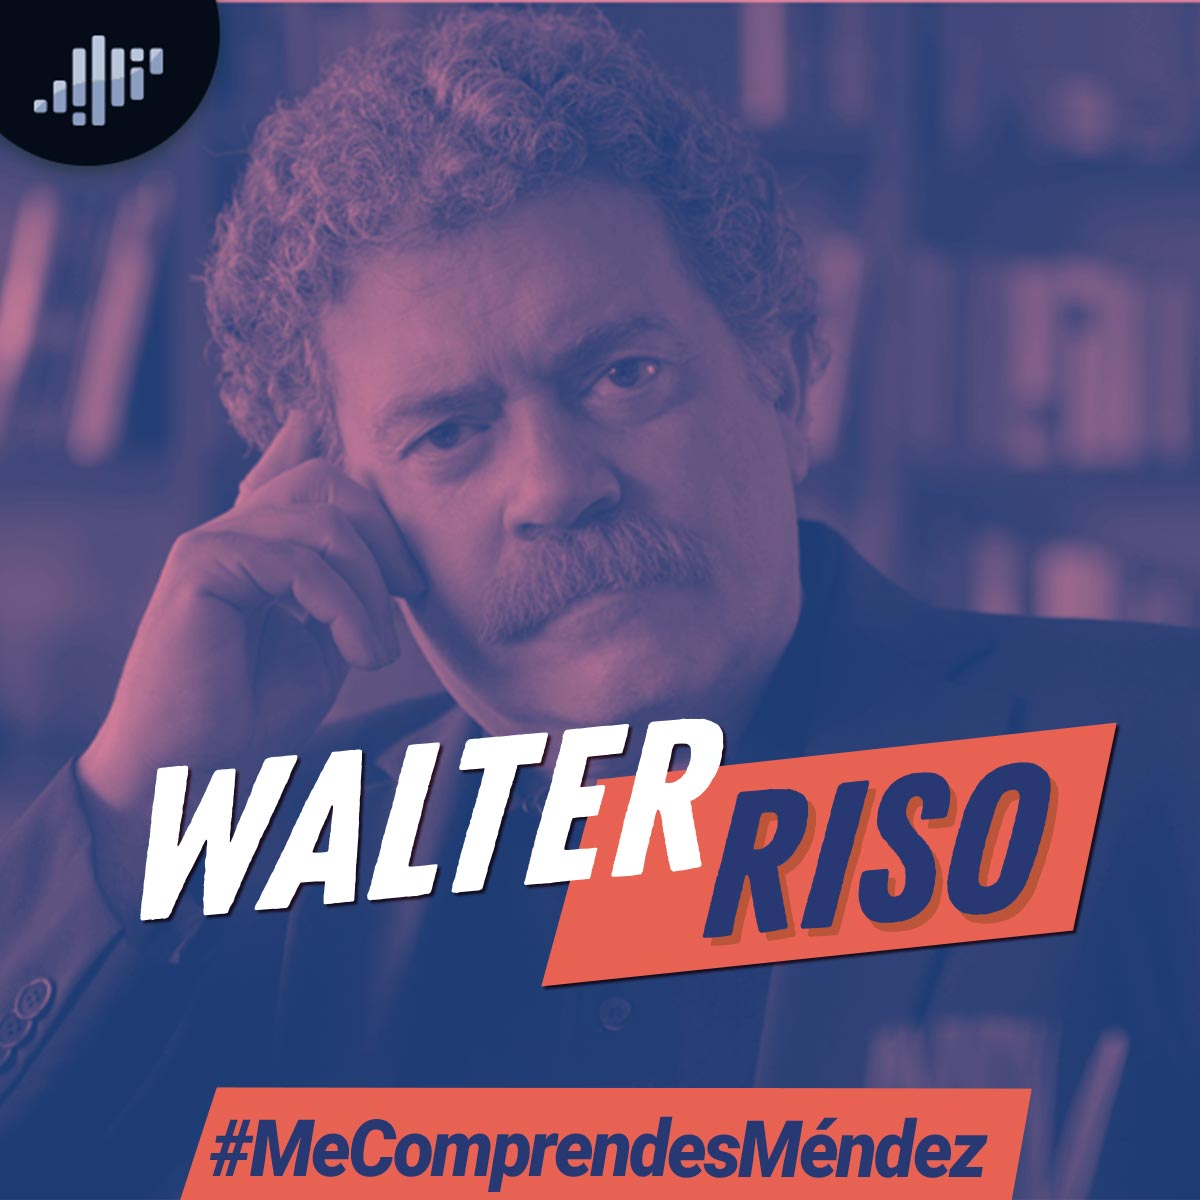 Walter Riso